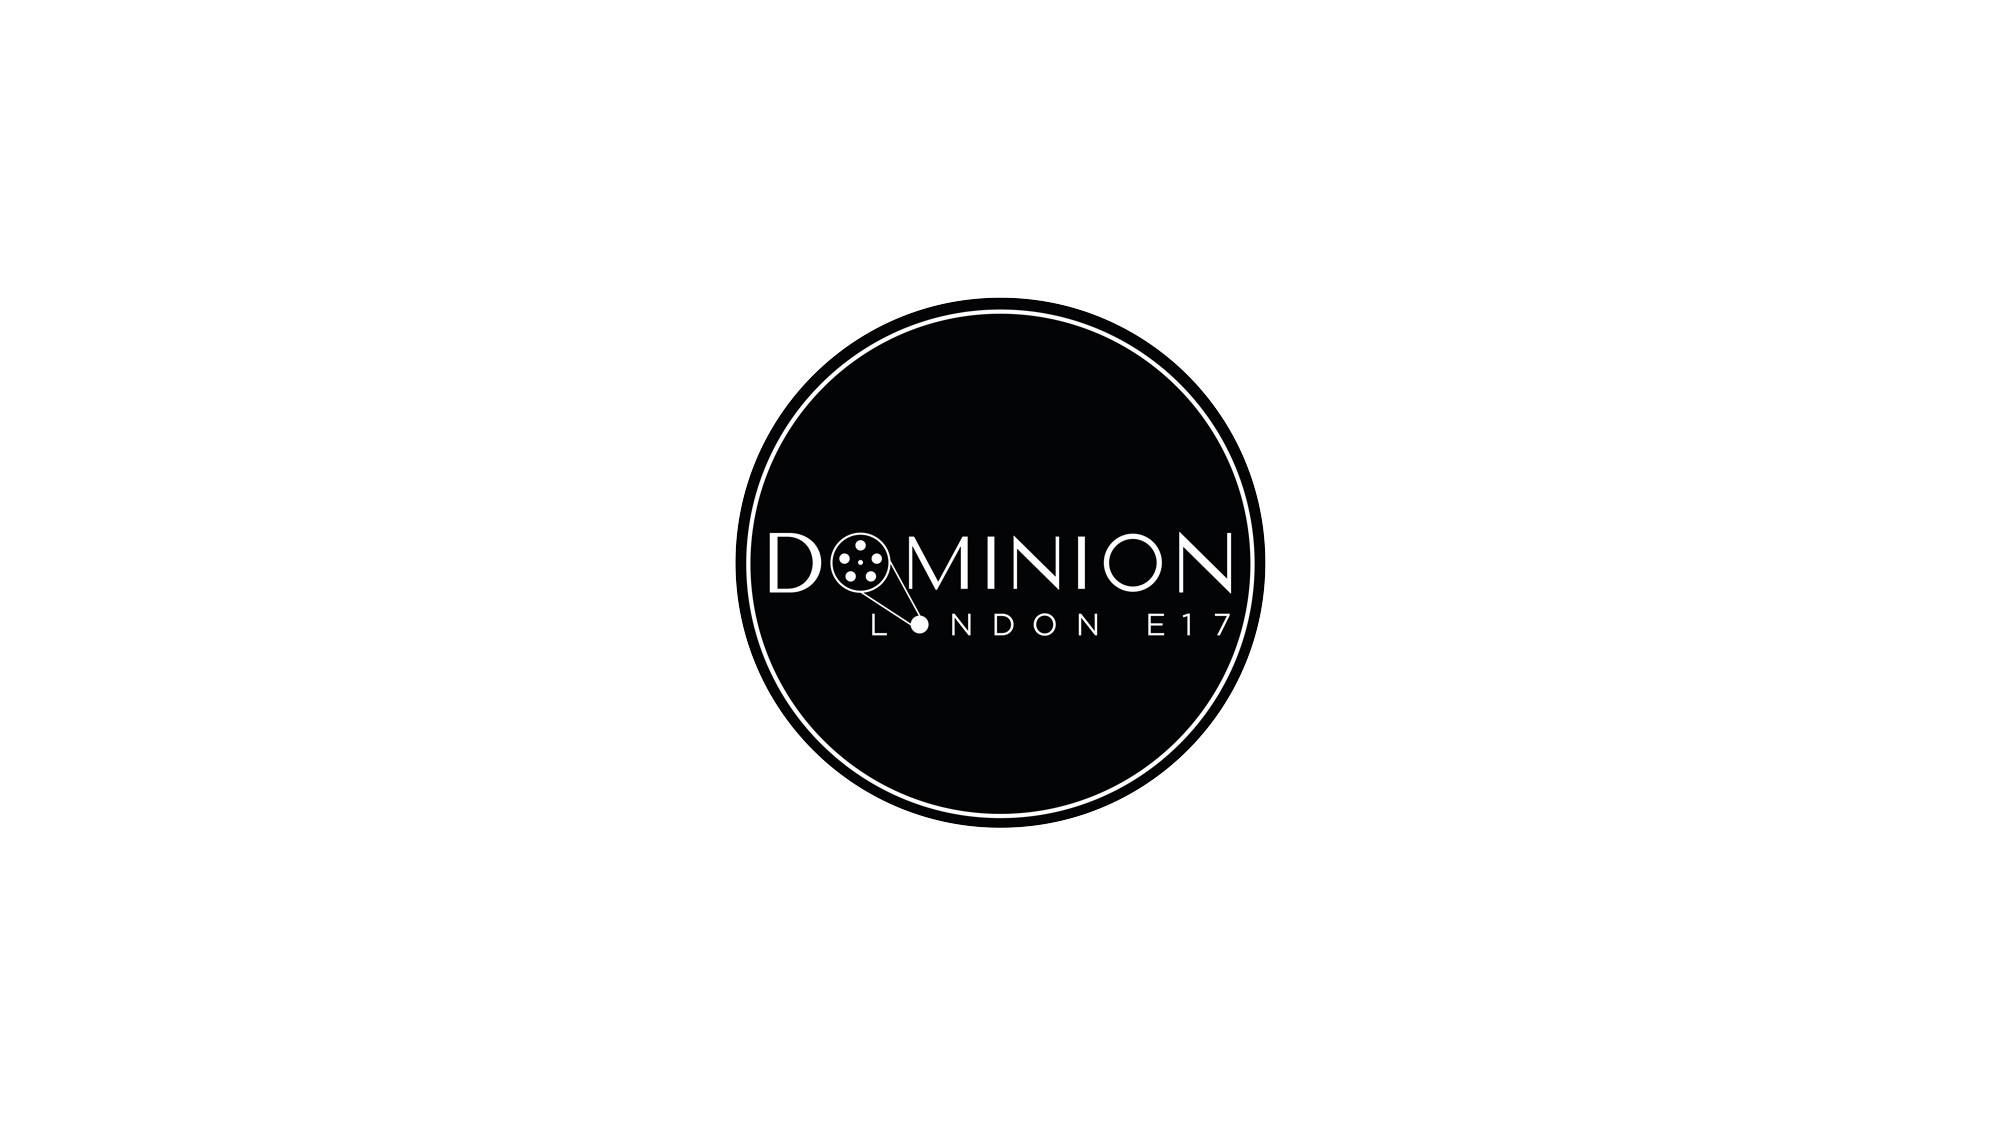 Dominion House development logo